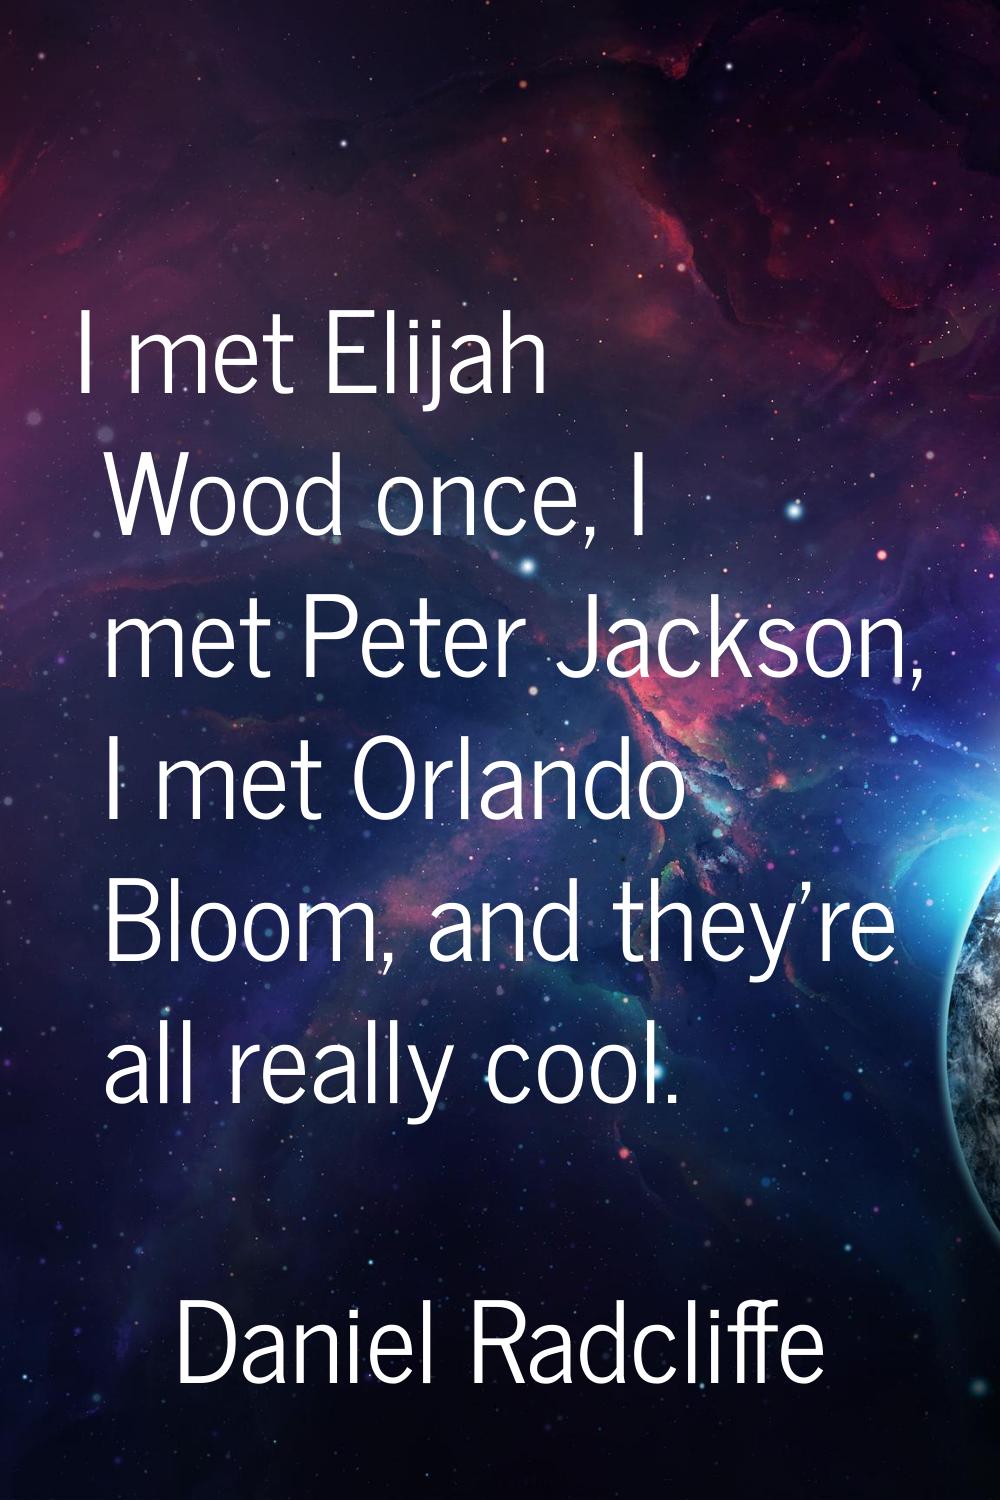 I met Elijah Wood once, I met Peter Jackson, I met Orlando Bloom, and they're all really cool.